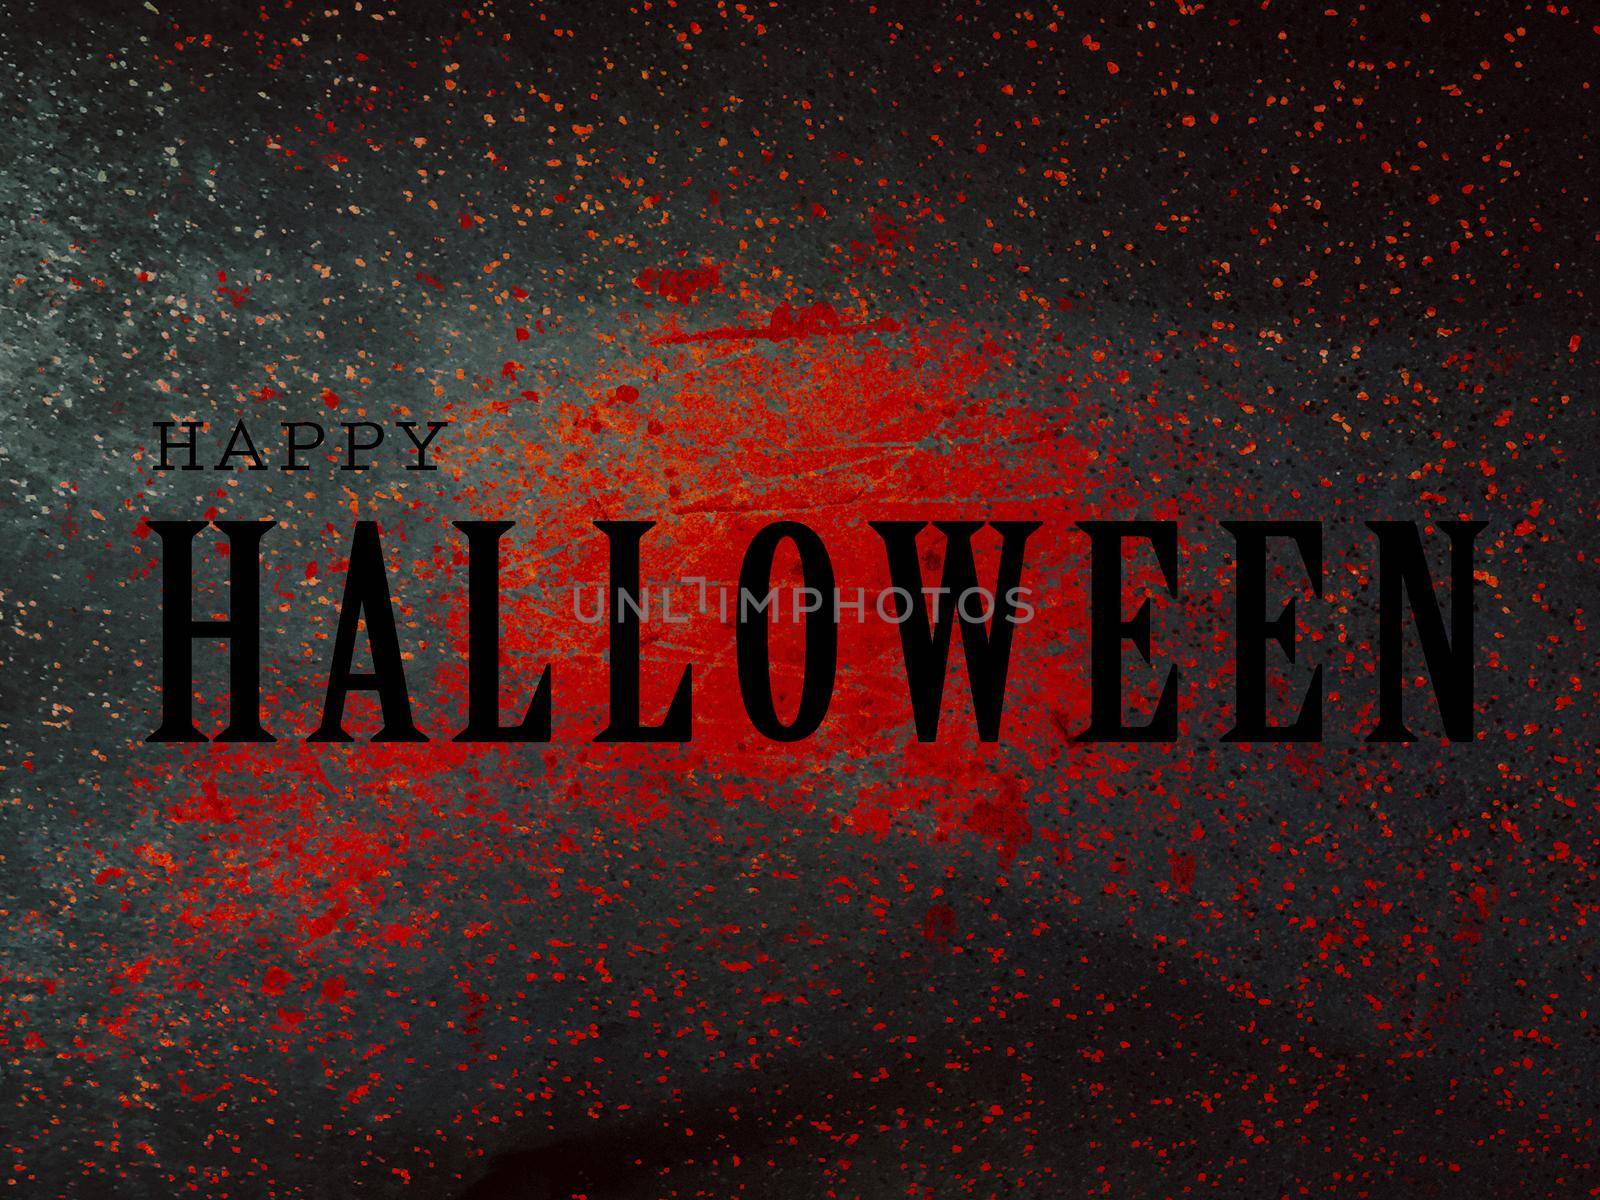 Happy Halloween word and bloody splash background illustration